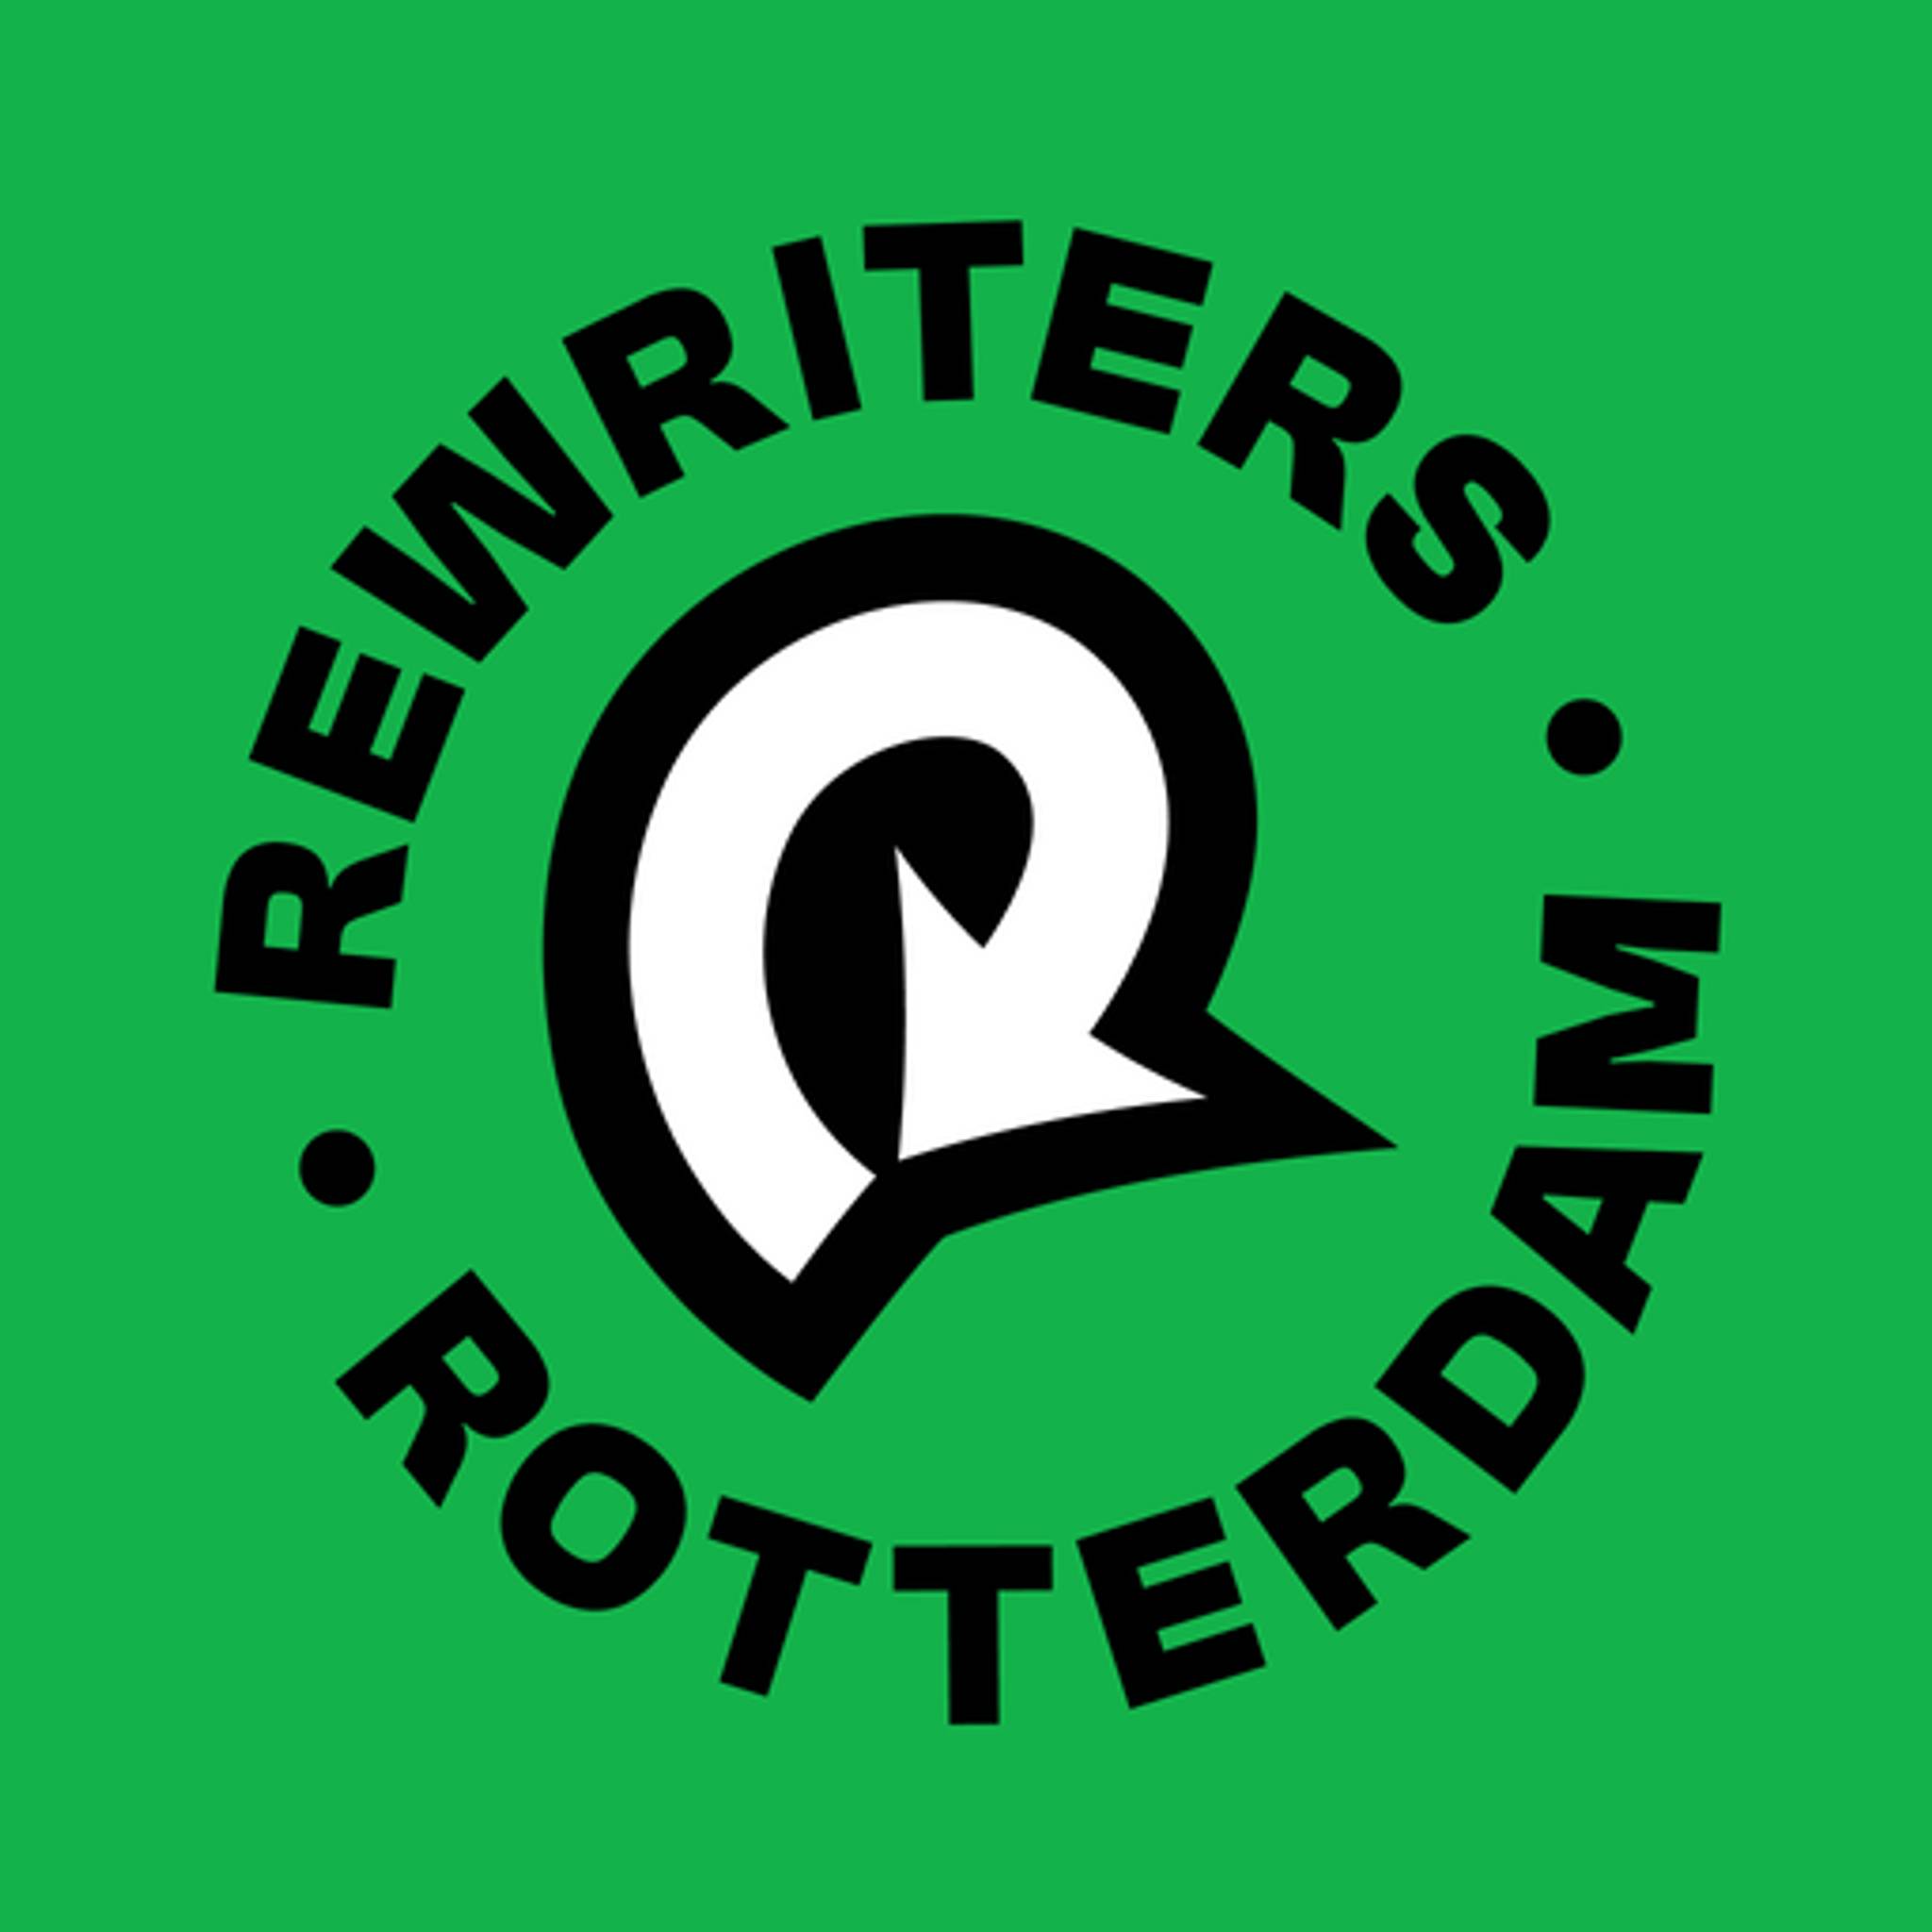 &mdash;Rewriters Rotterdam